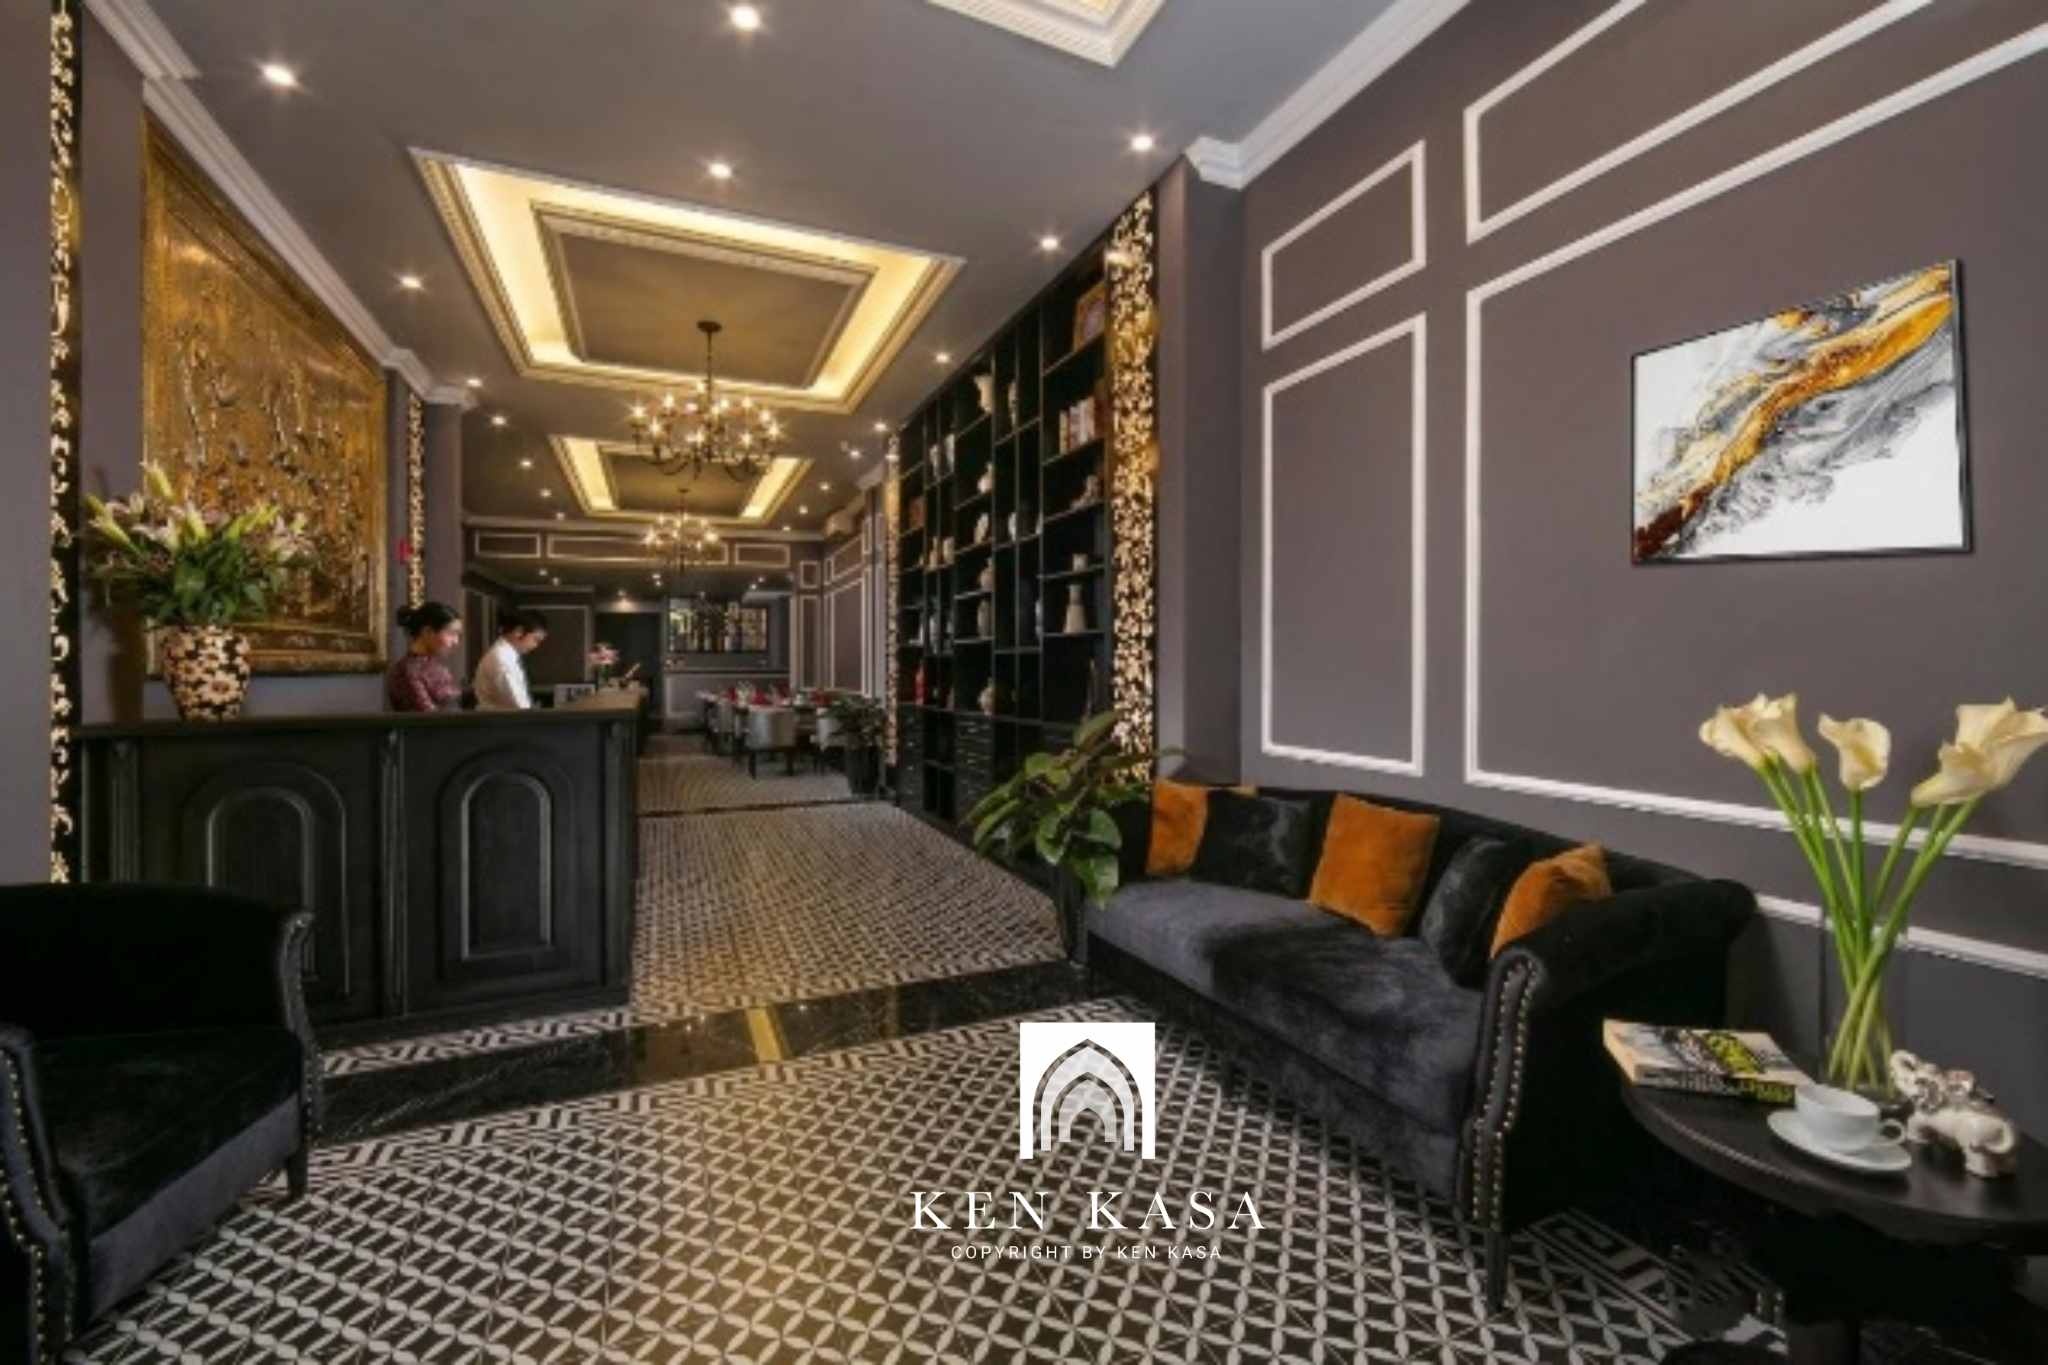 Review Matilda Boutique Hotel & Spa - Nét đẹp Boutique hòa quyện với Indochine trong thiết kế